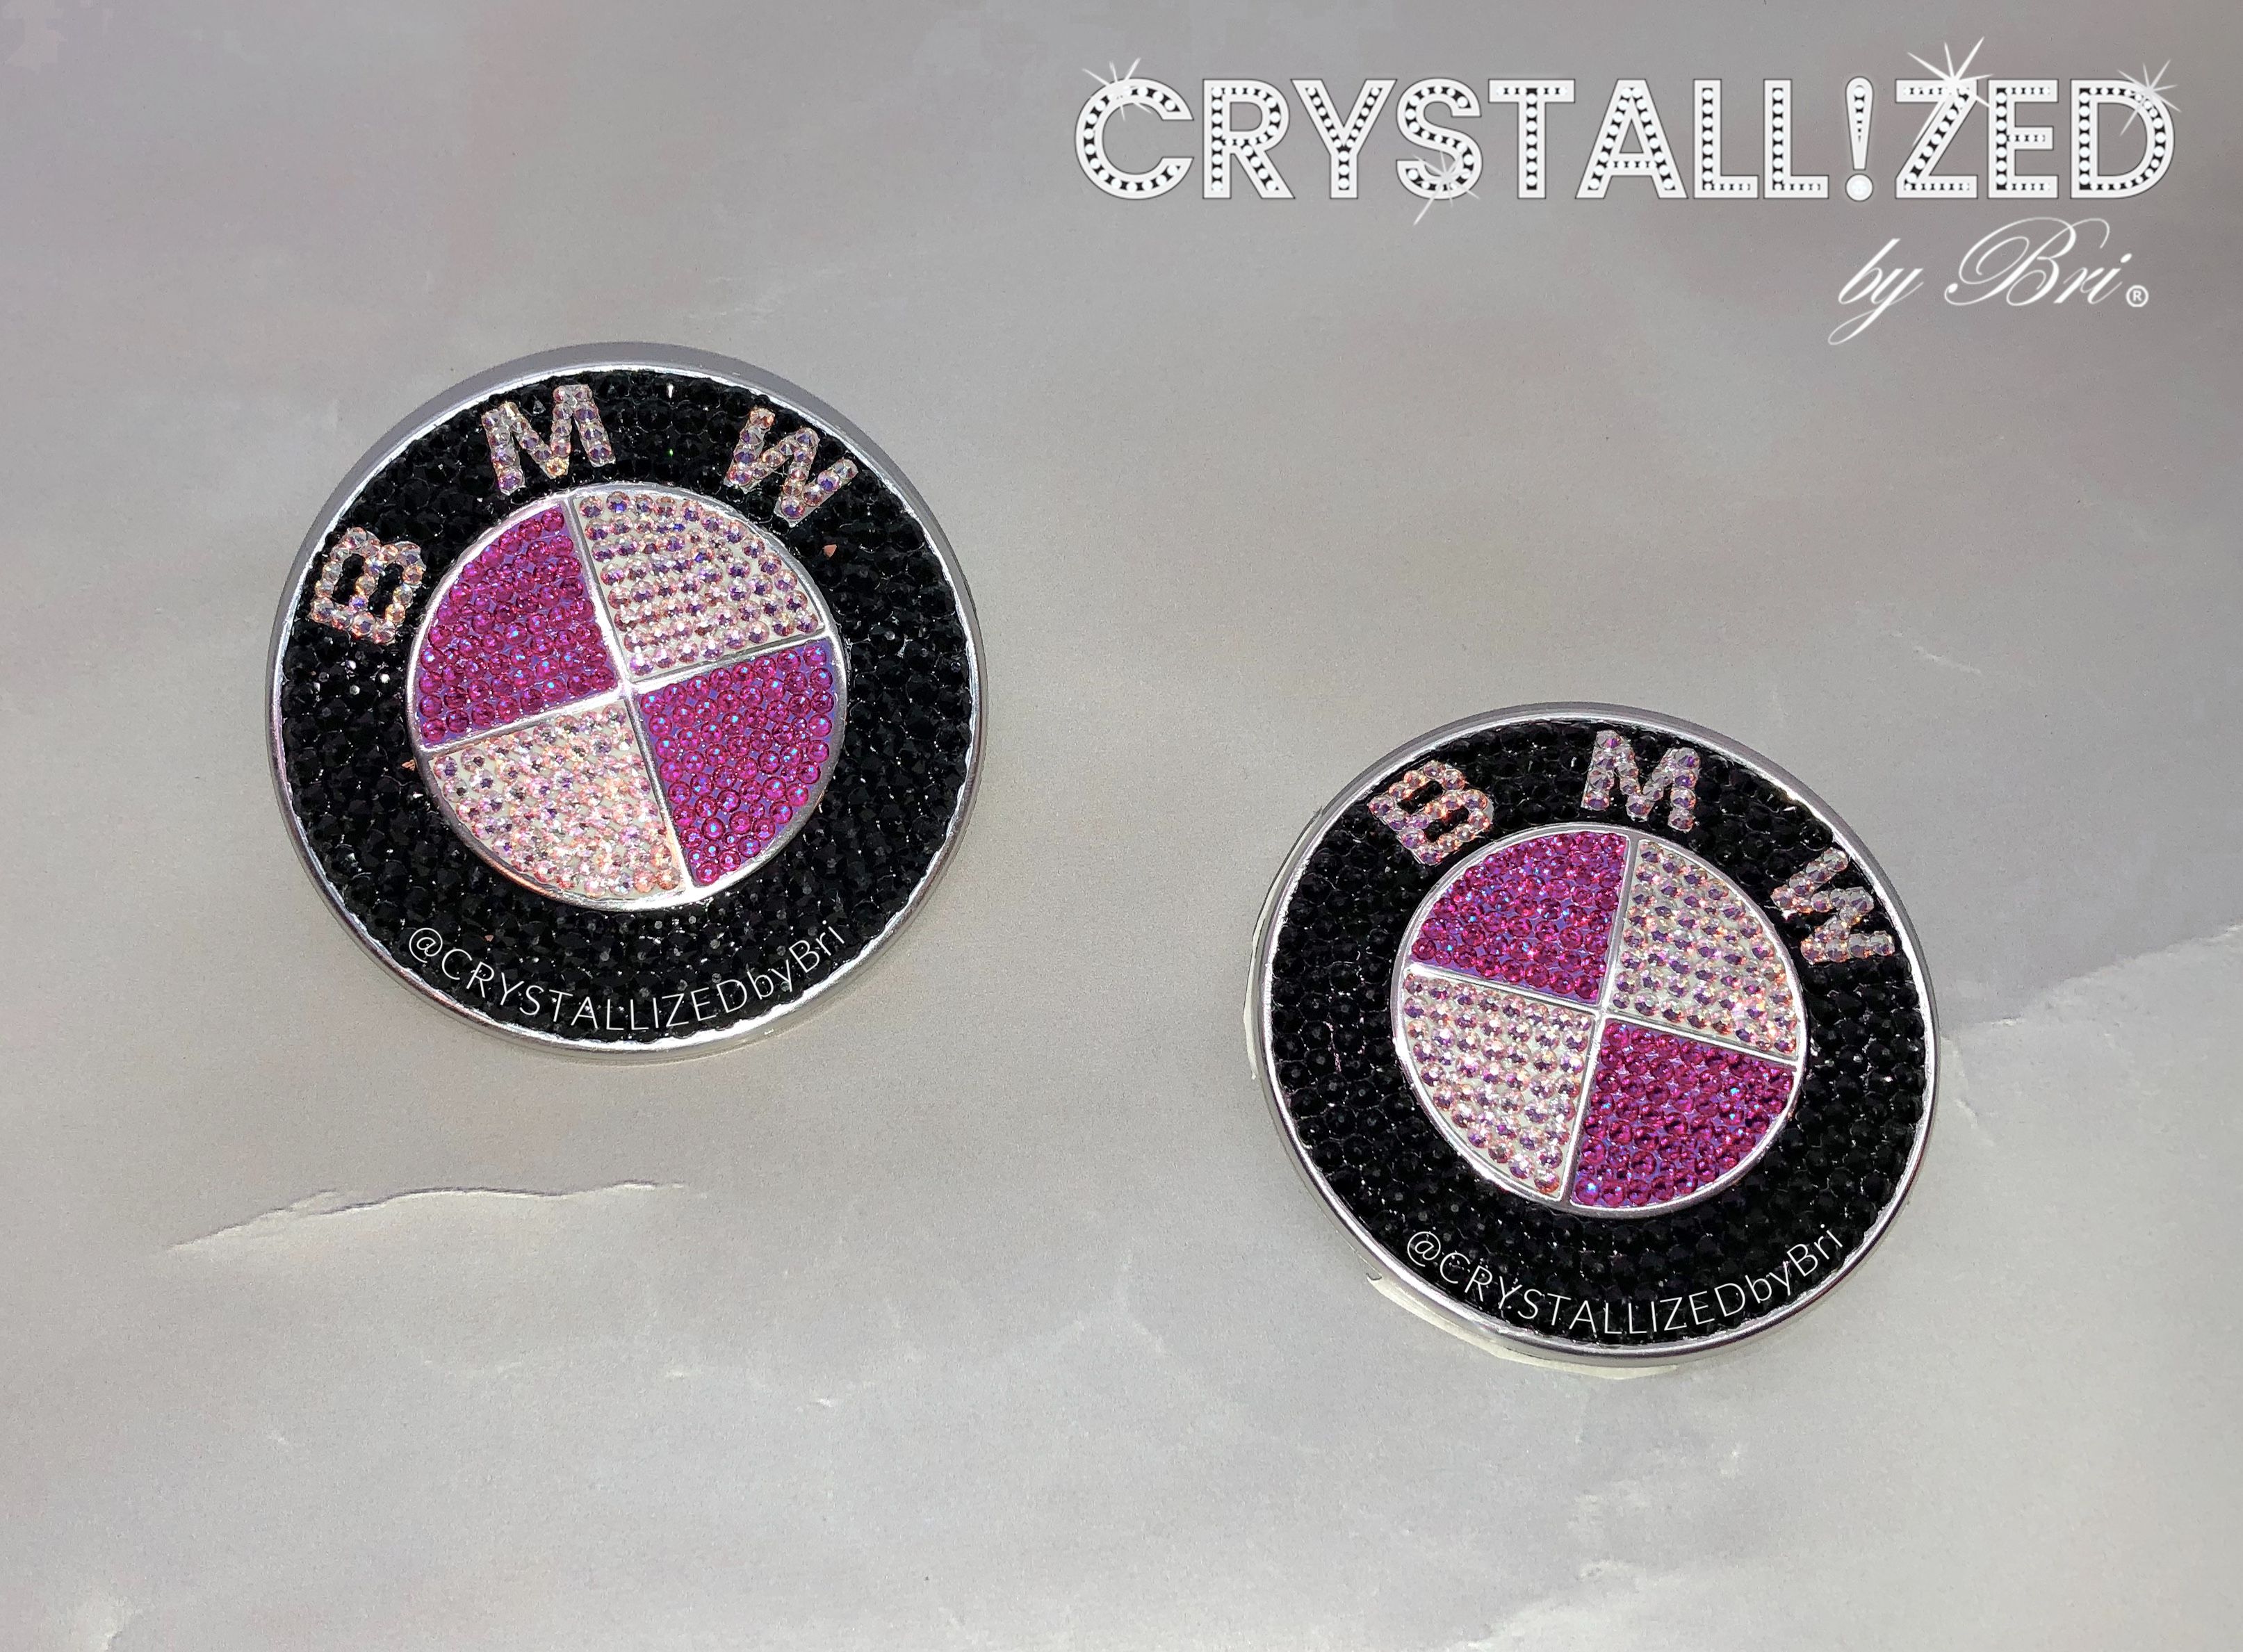 BMW Emblem With Swarovski or High Quality Pinkwhite Crystals